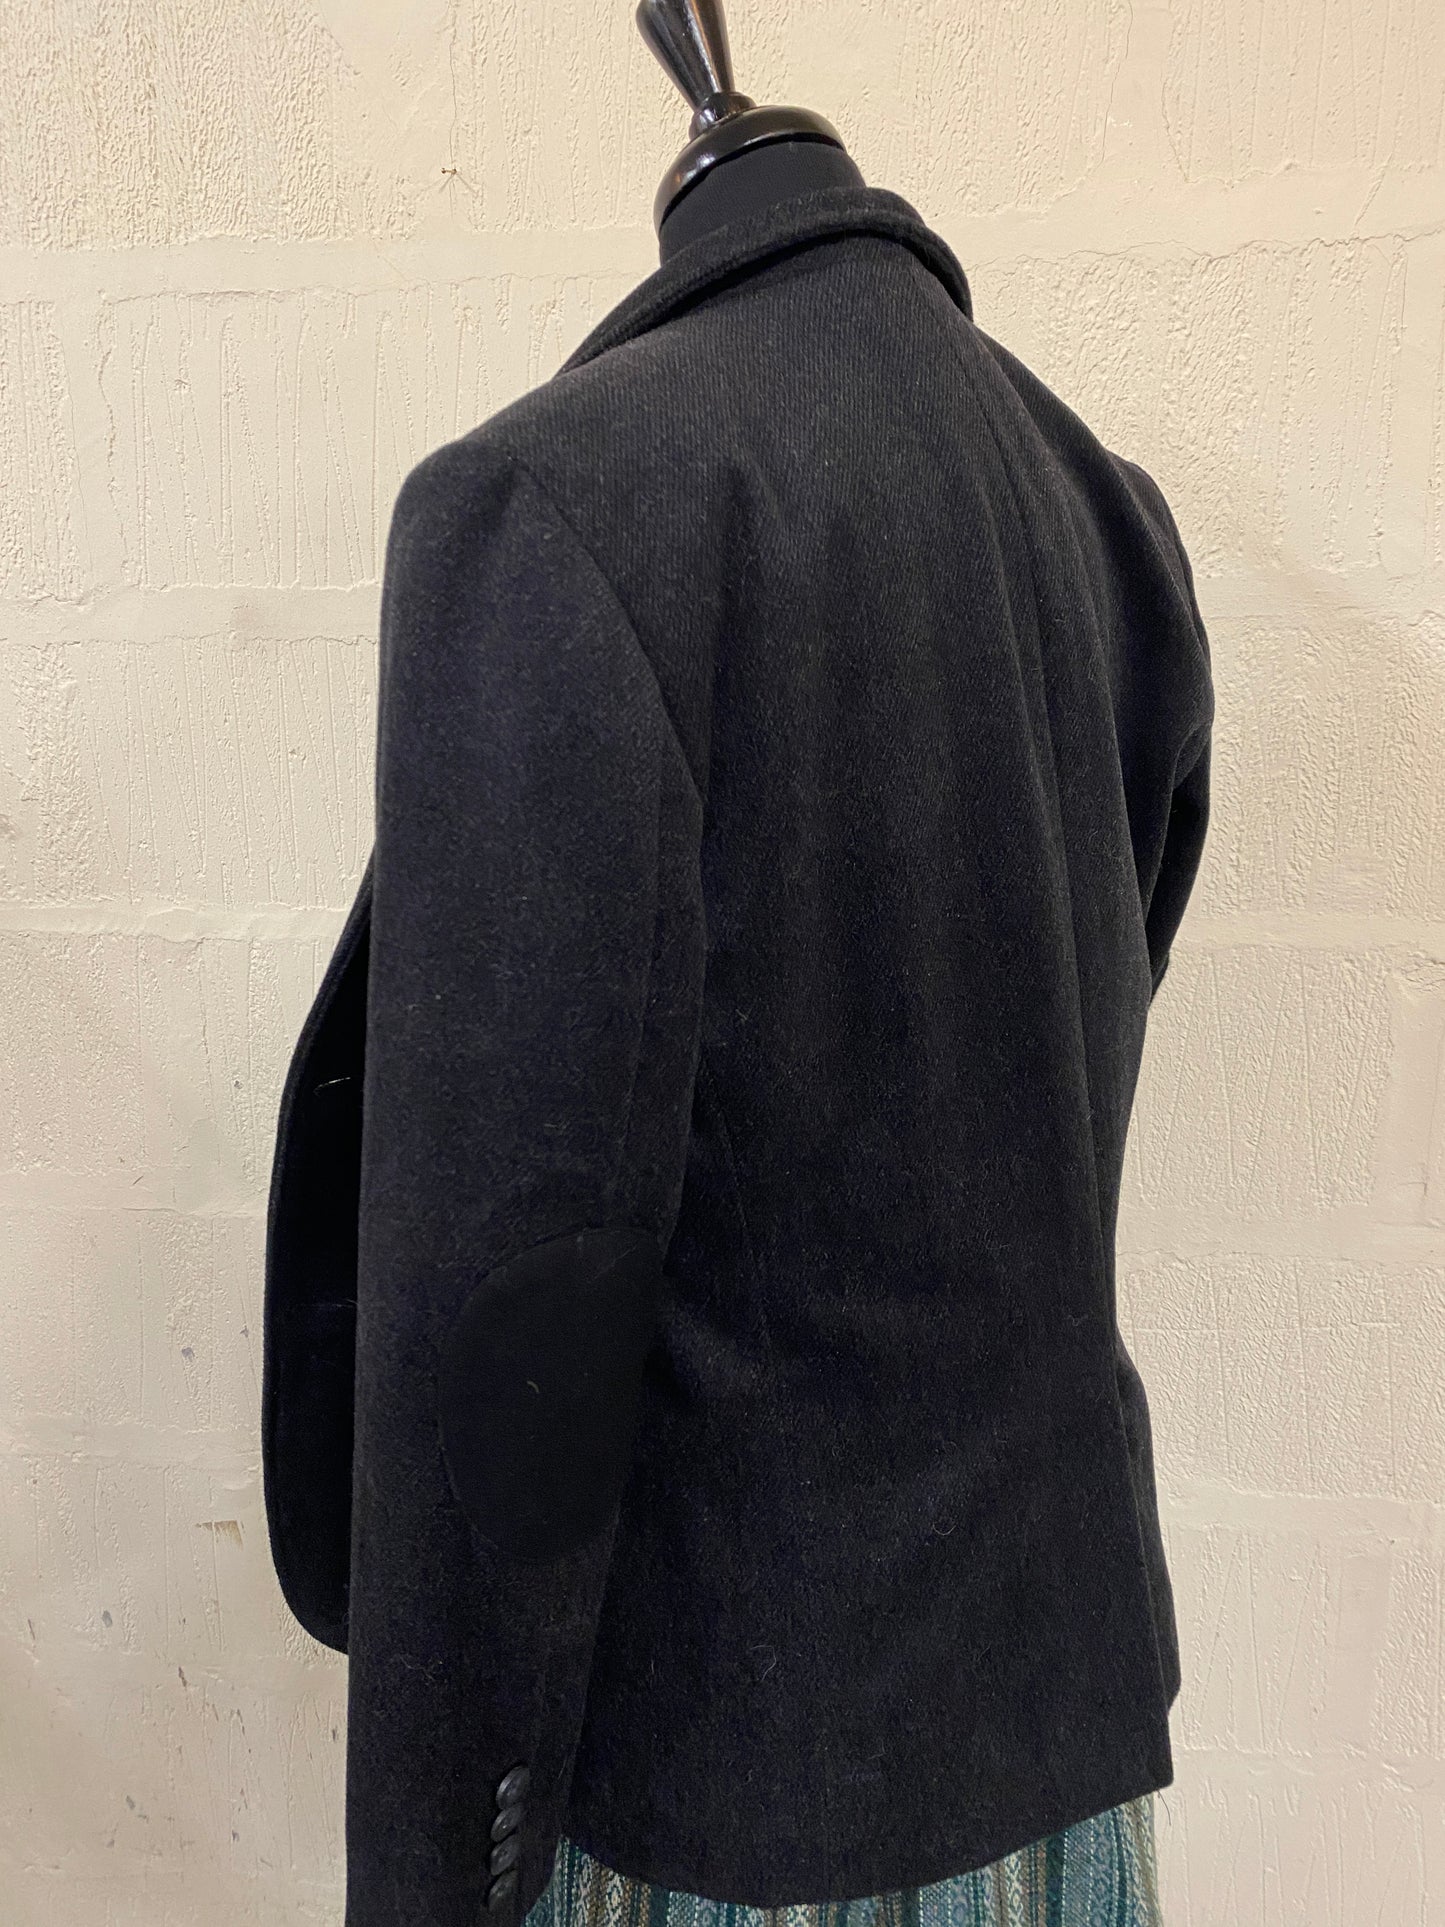 Charcoal Grey Wool Blend Coat Size 10